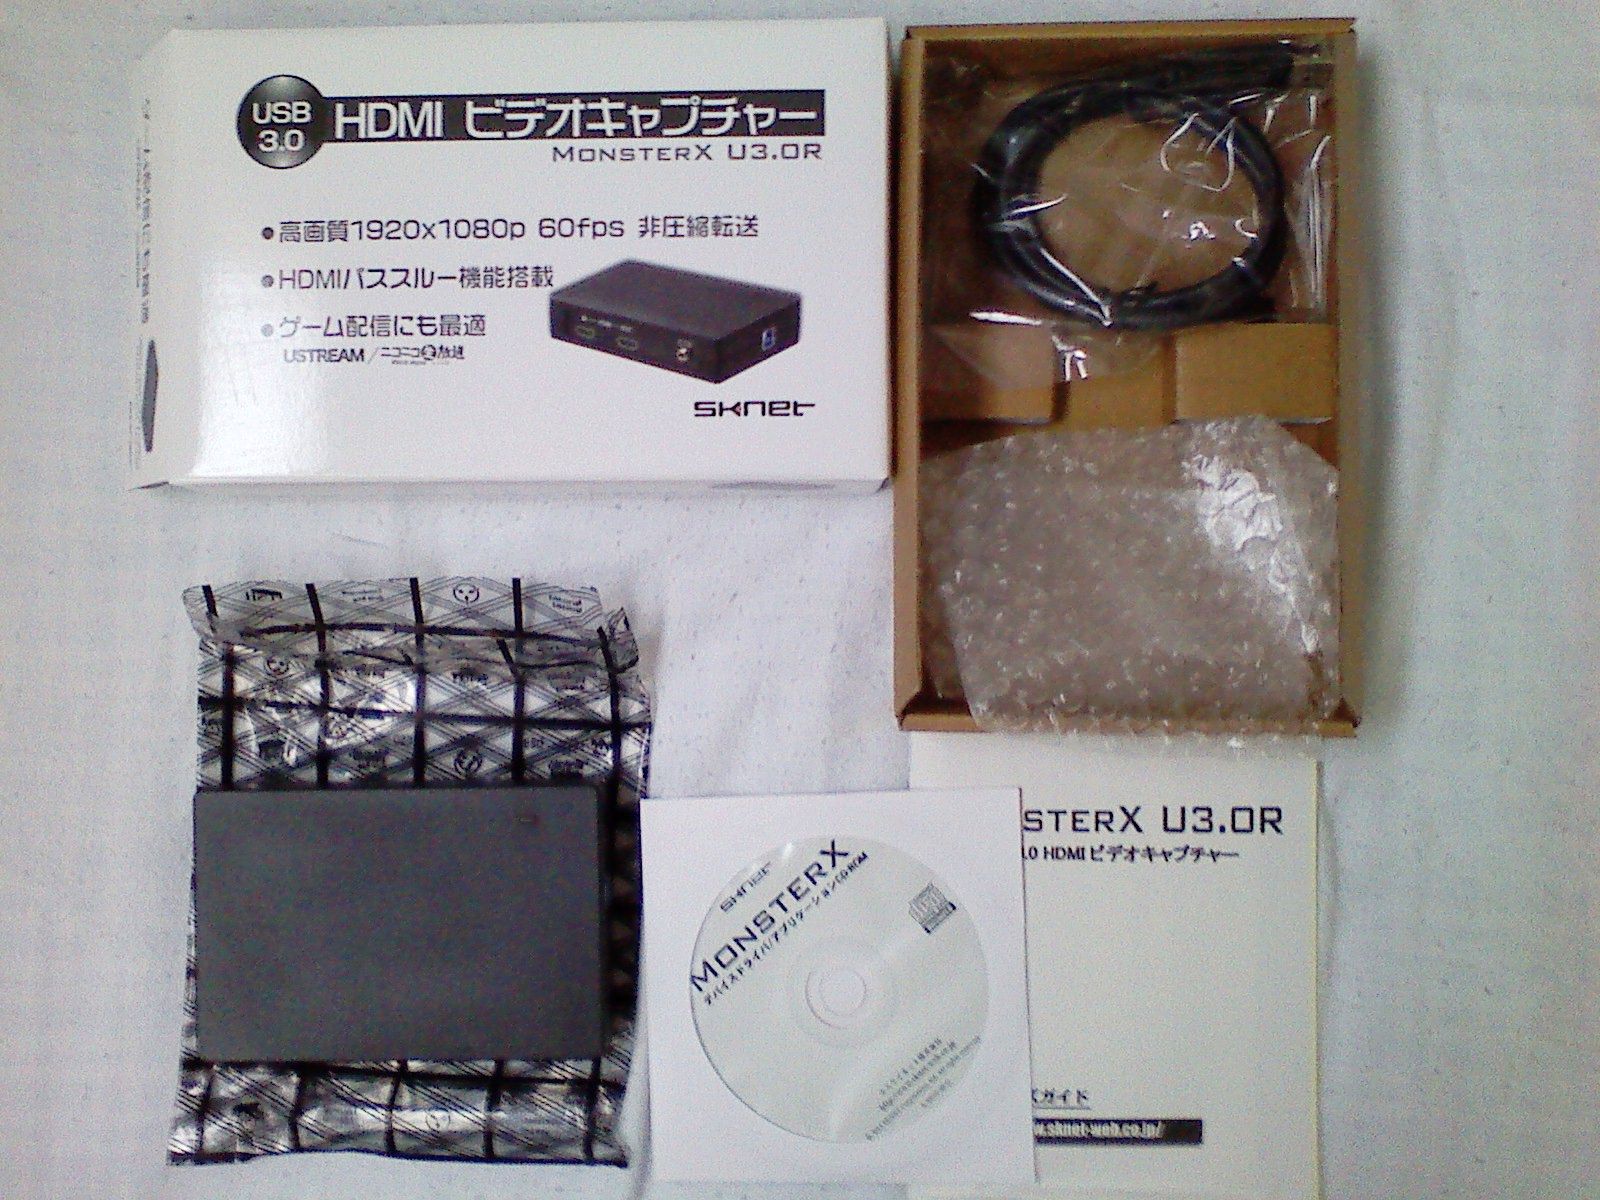 MonsterX U3.0R SK-MVXU3R購入レビュー【HDMI USB3.0】 - iTブログ